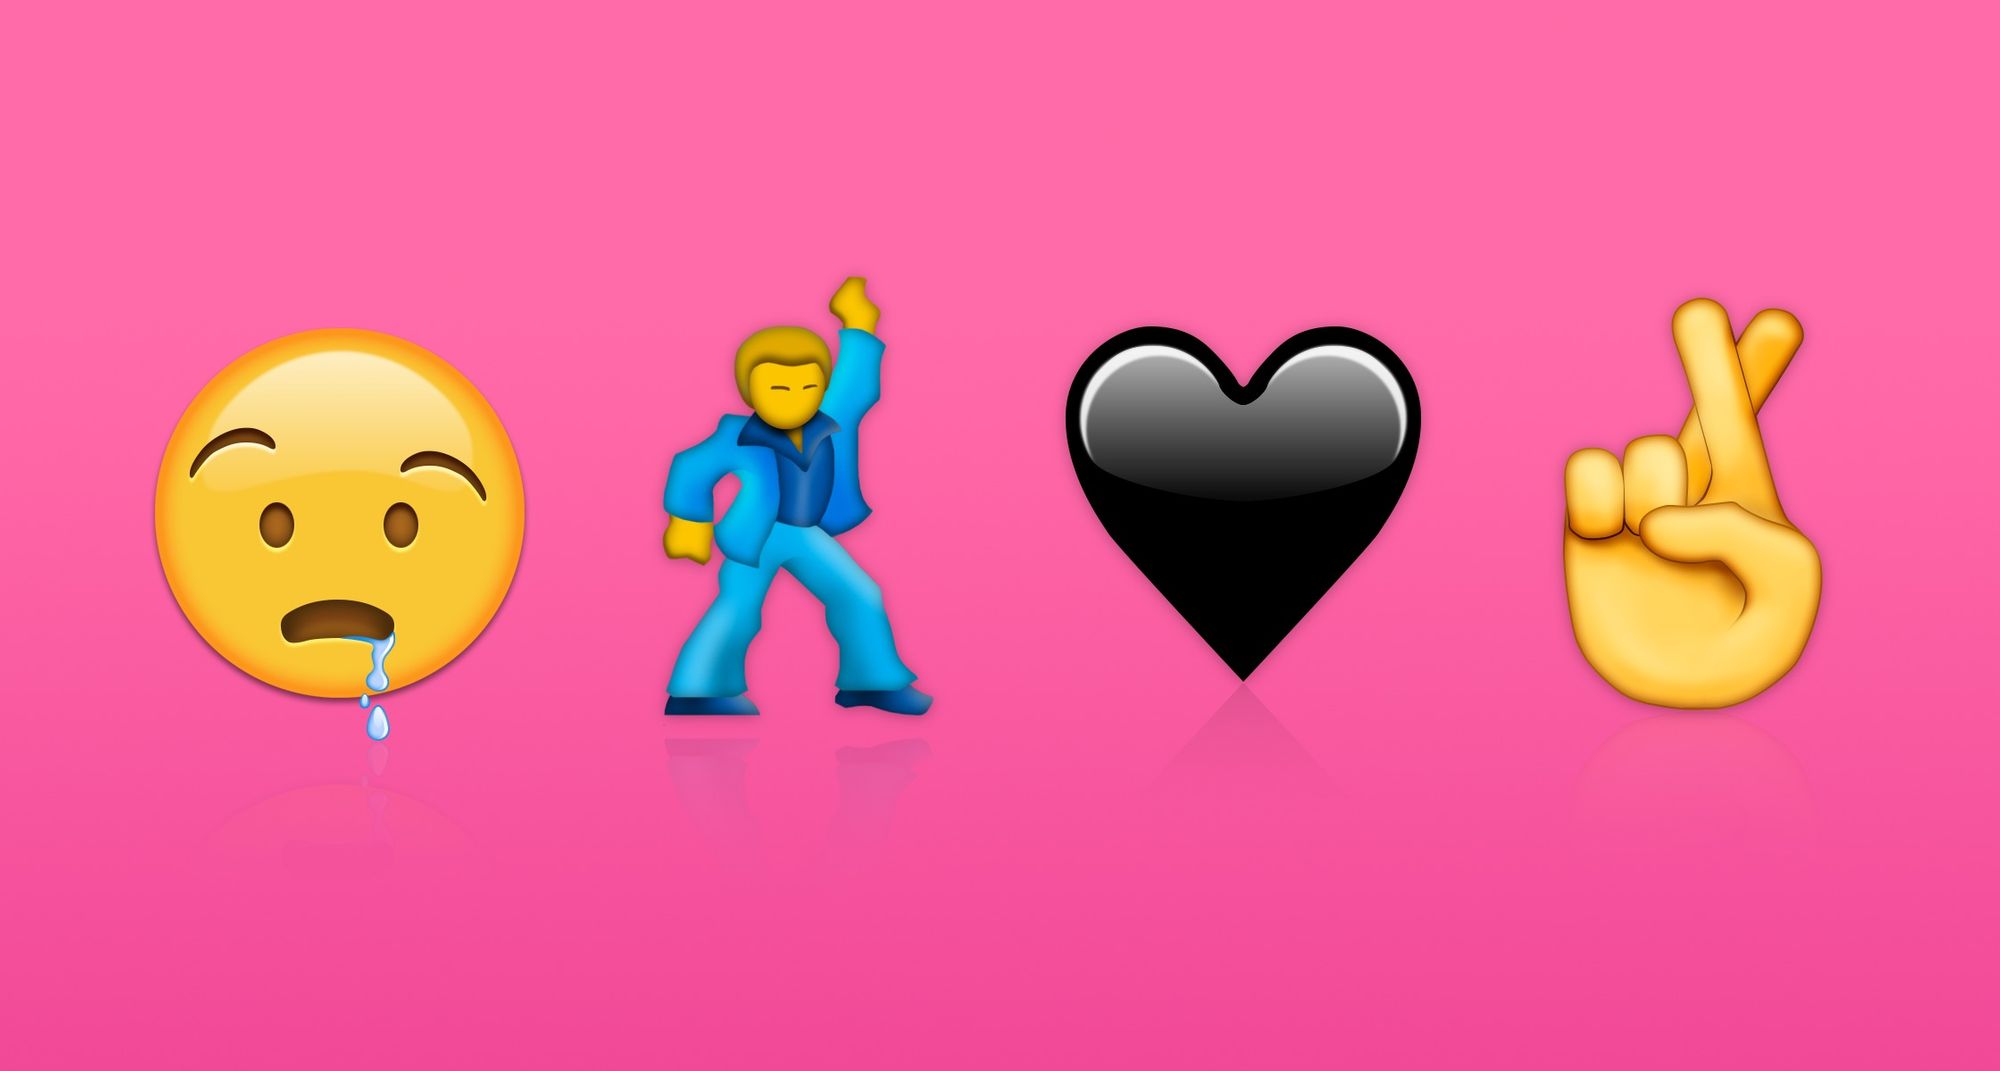 Unicode 9.0 Released With 72 New Emojis